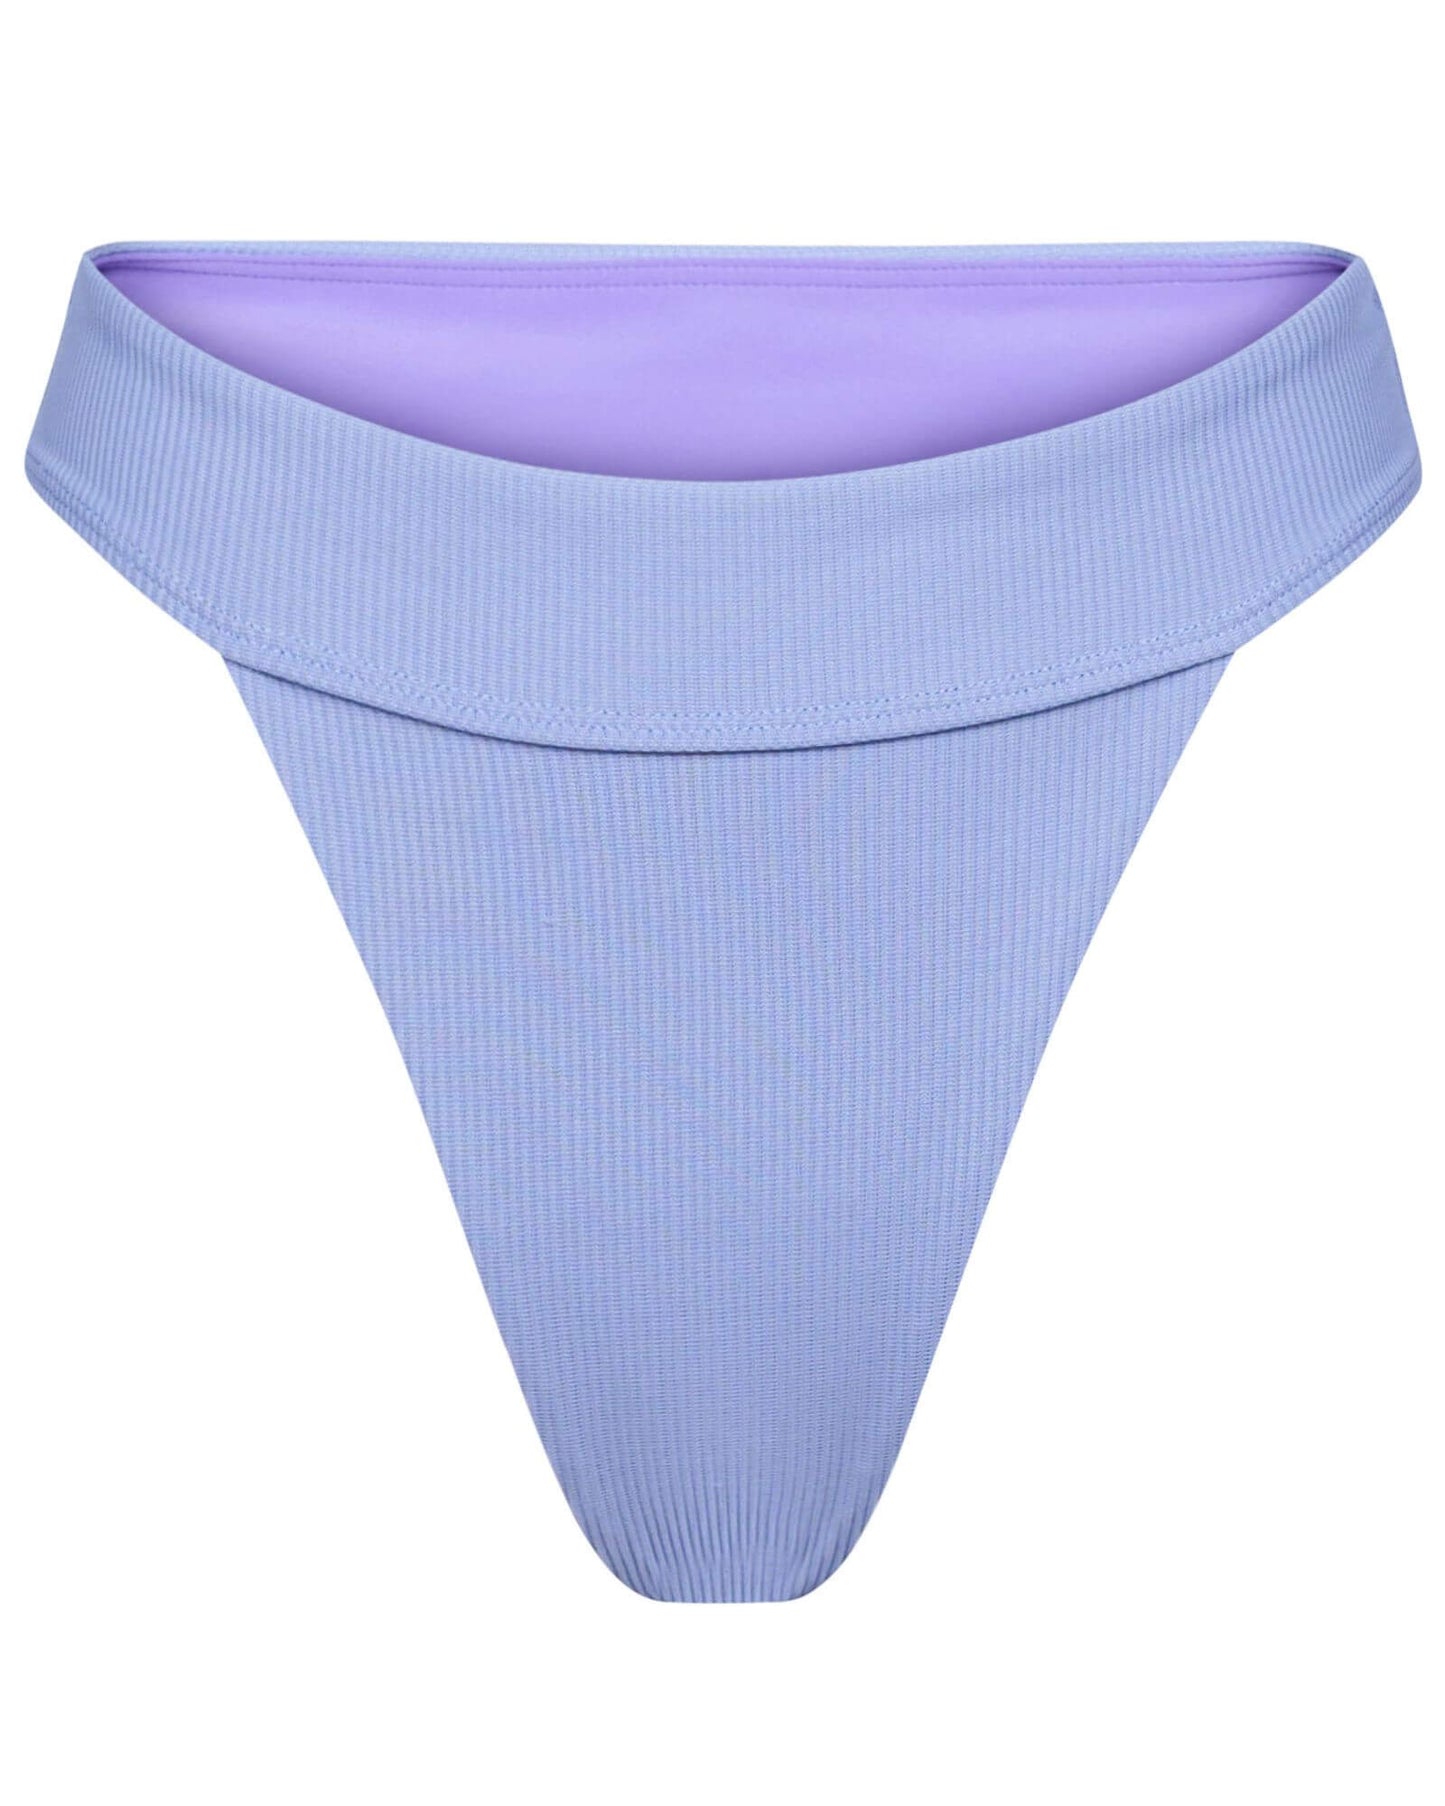 Axelle bottom brazilian - Purple rib